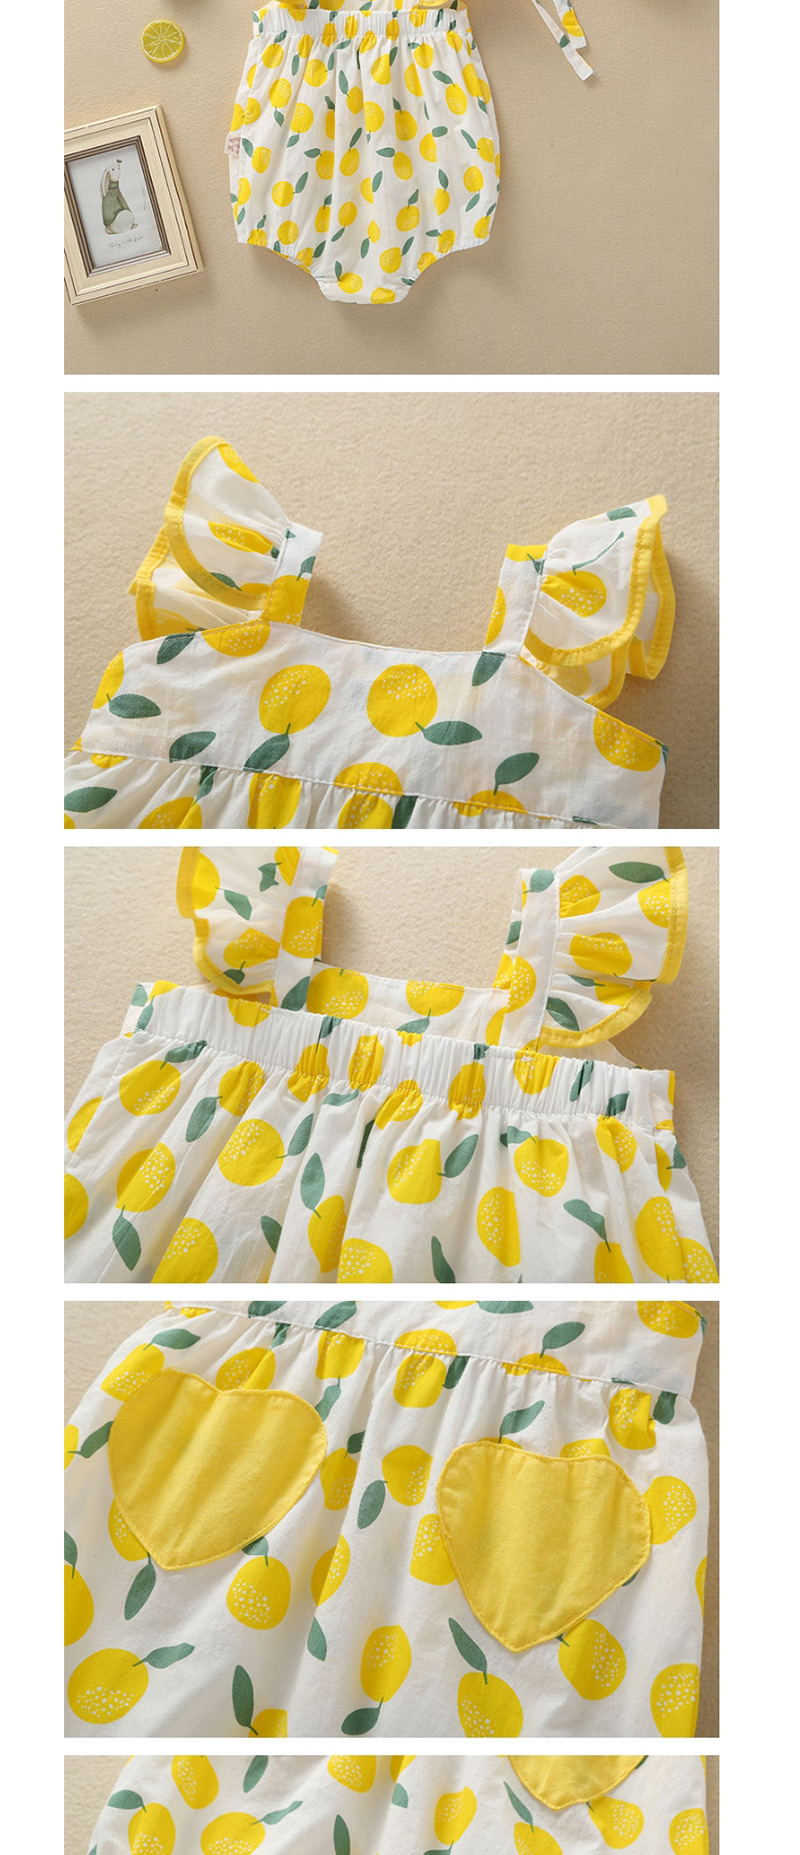 Fashion Lemon Yellow Fruit Print Love Patch Pocket Baby Triangle Lace,Kids Clothing